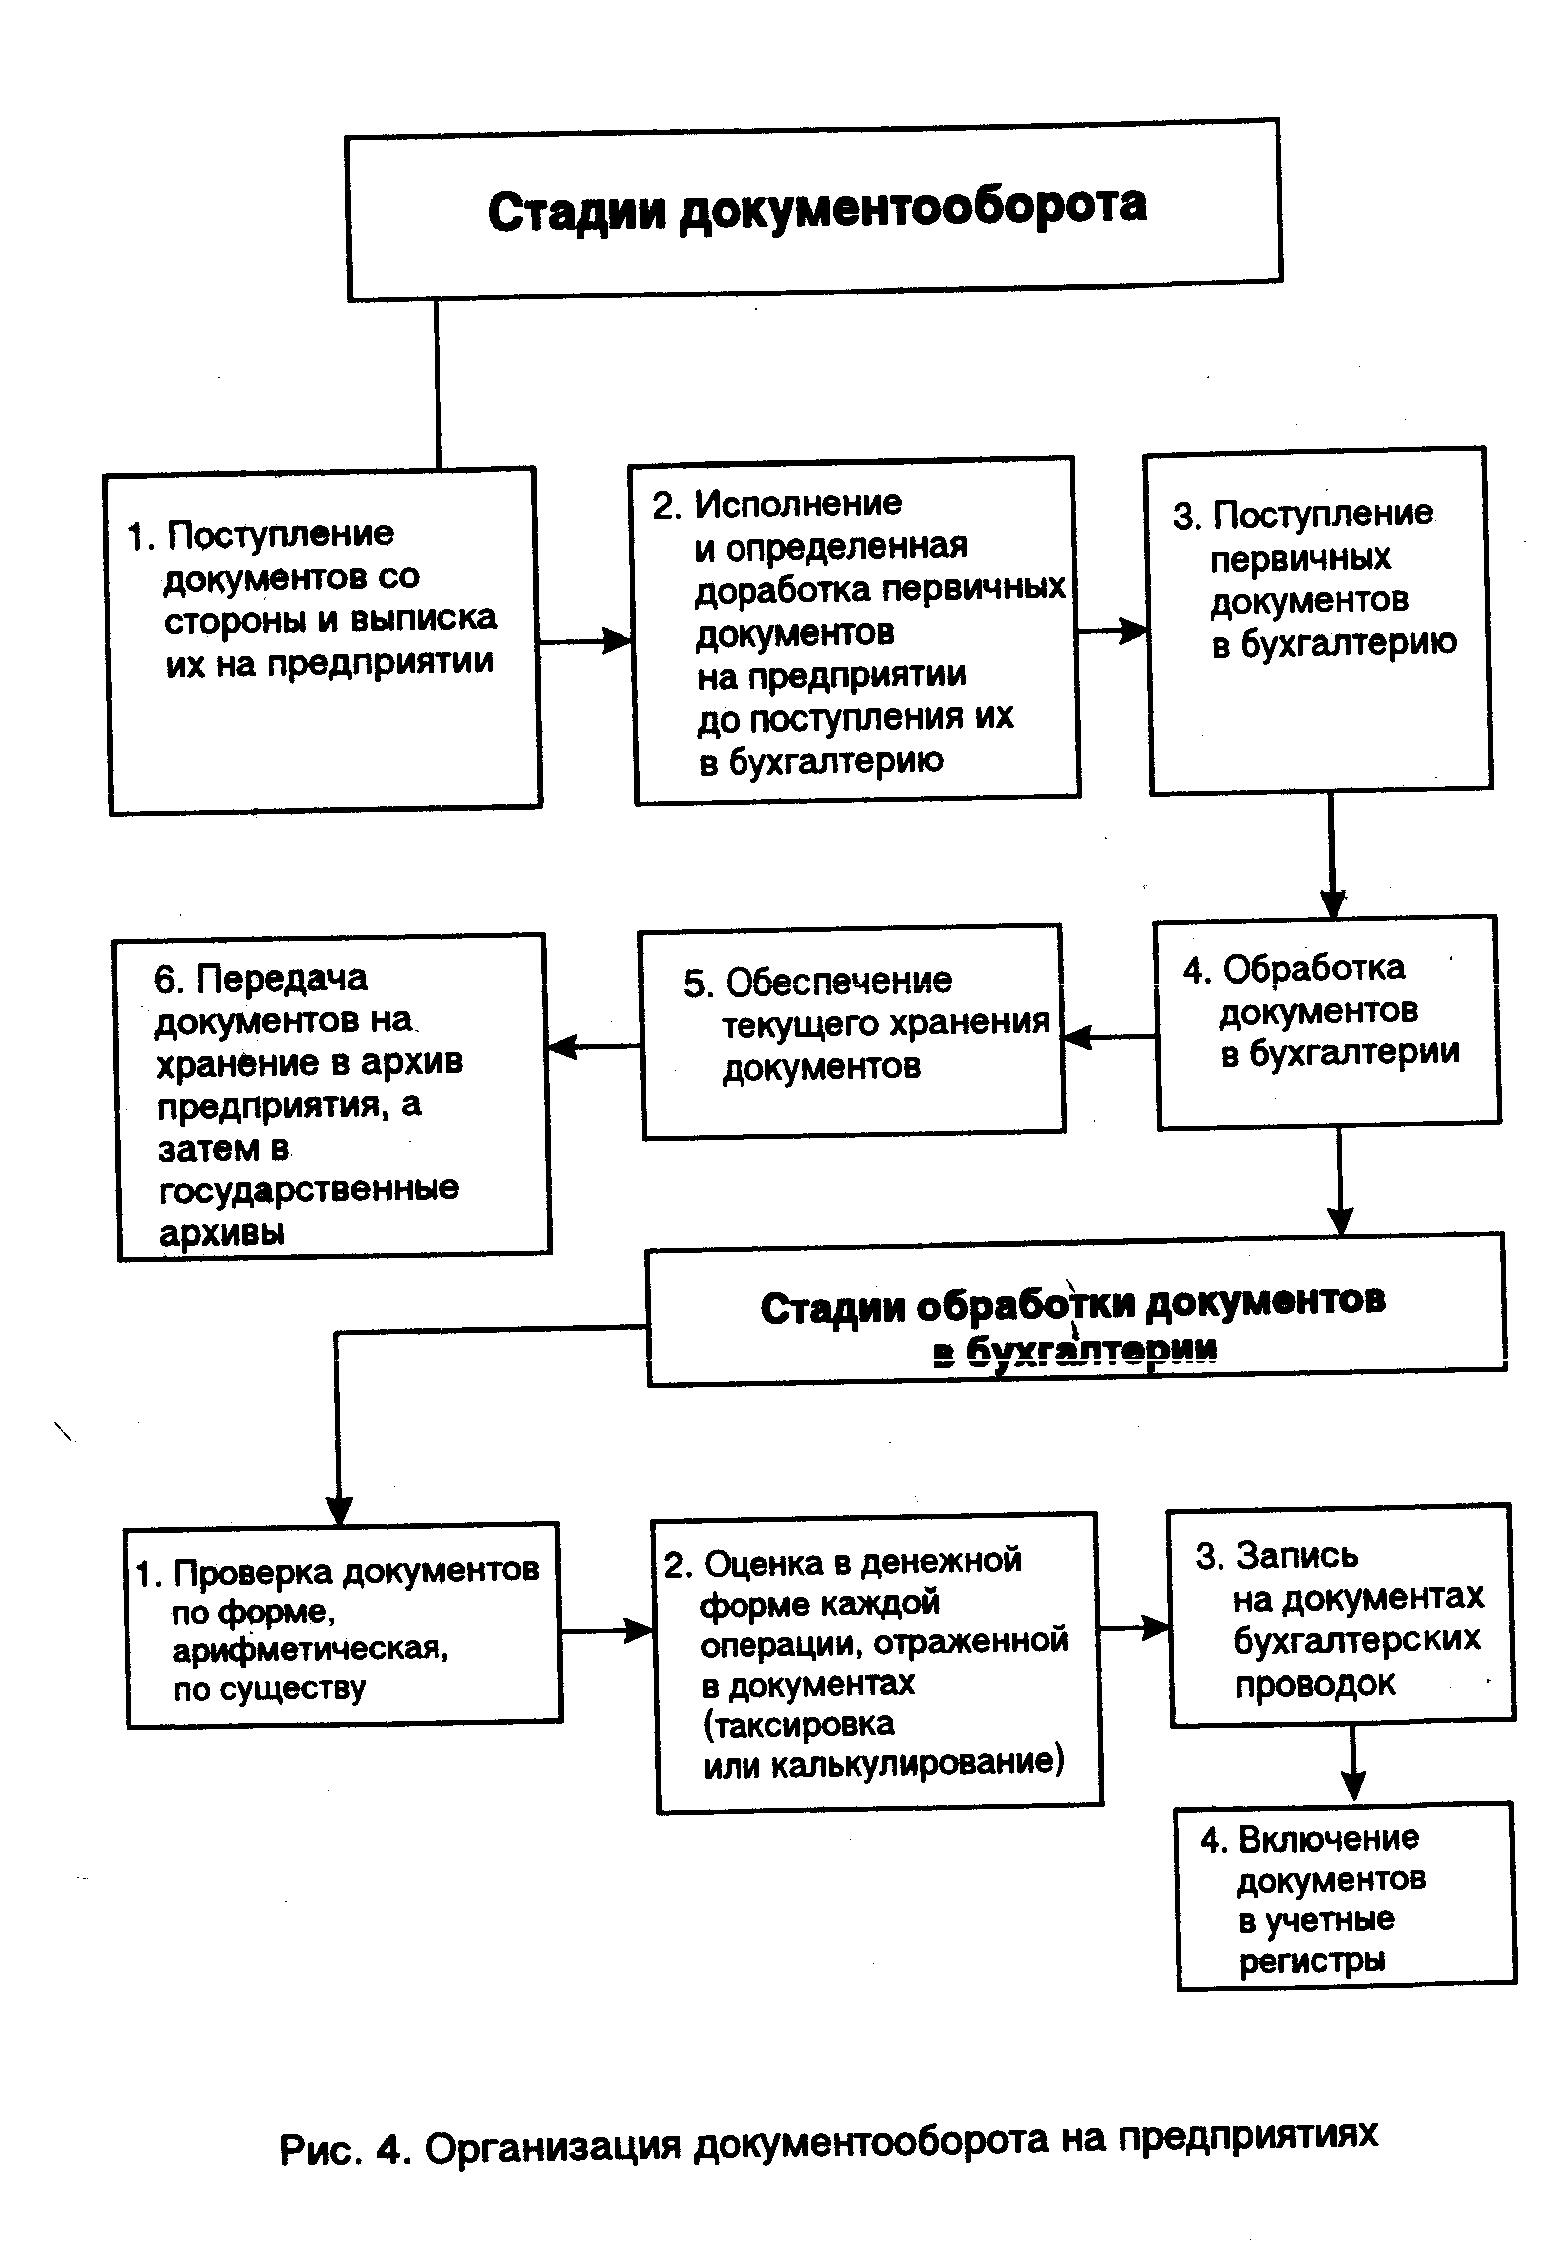 Инструкция по организации документооборота